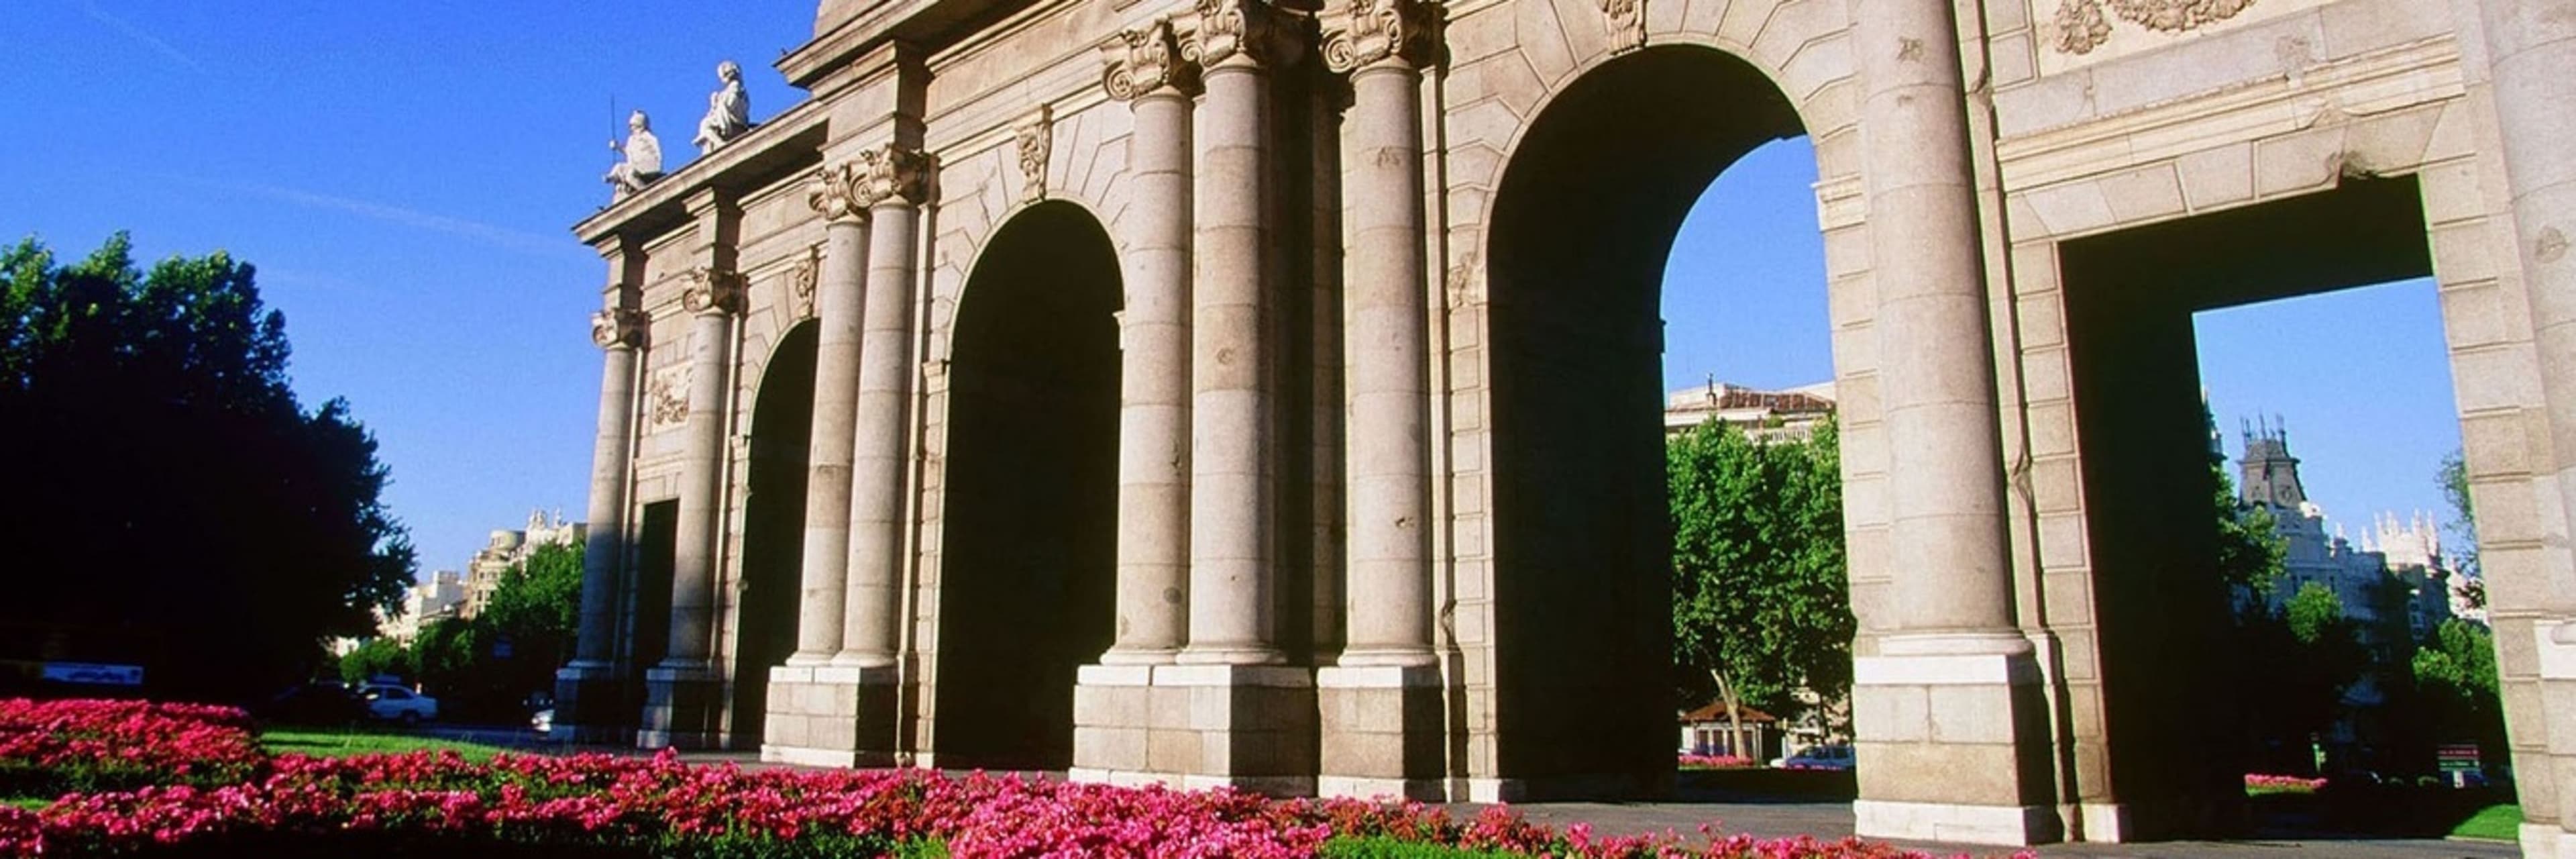 Puerta de Alcalá city gate in Madrid.